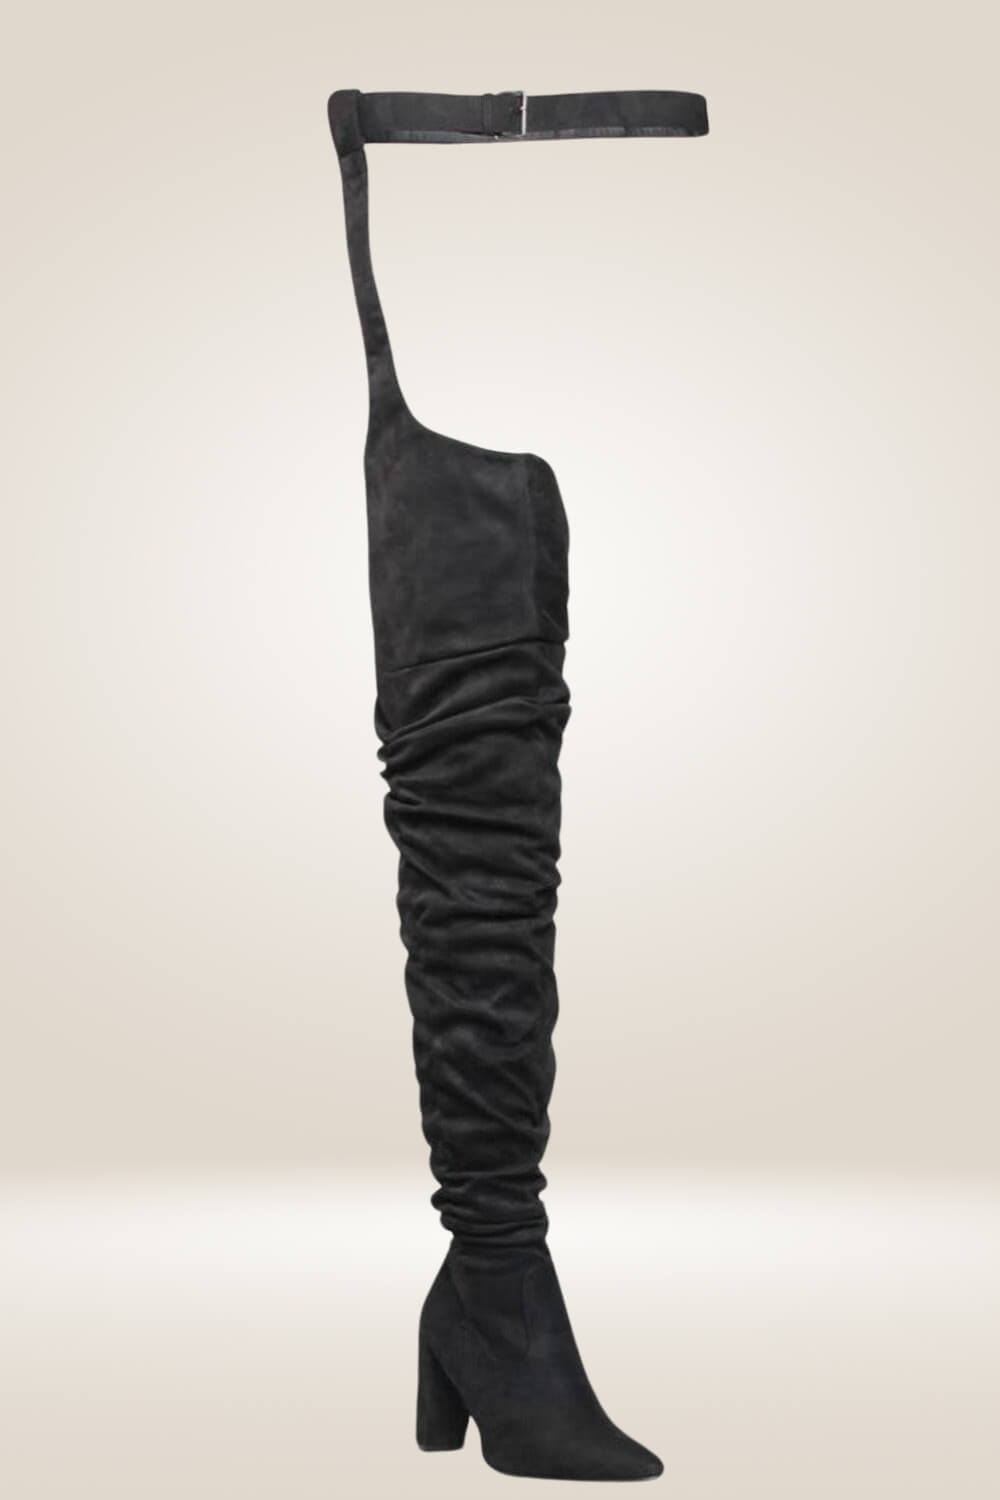 Rihanna Over the Knee Black Boots With Waist Belt - TGC Boutique - Thigh High Boots